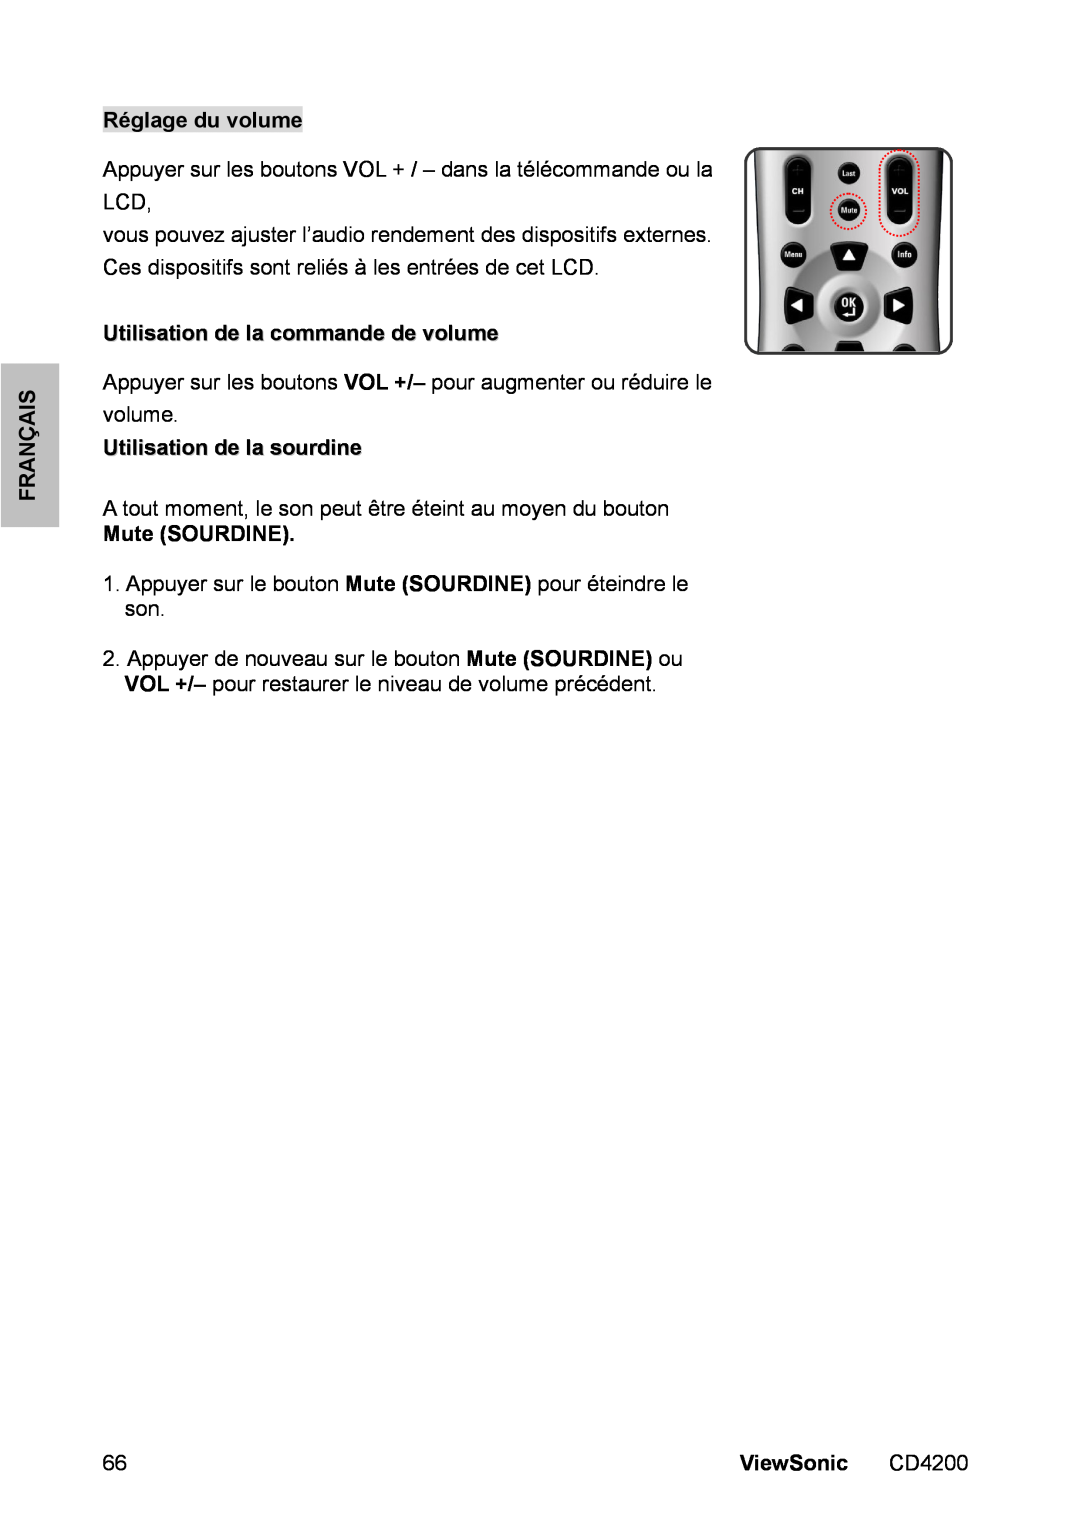 ViewSonic CD4200 manual Réglage du volume, Utilisation de la commande de volume, Utilisation de la sourdine, Mute SOURDINE 